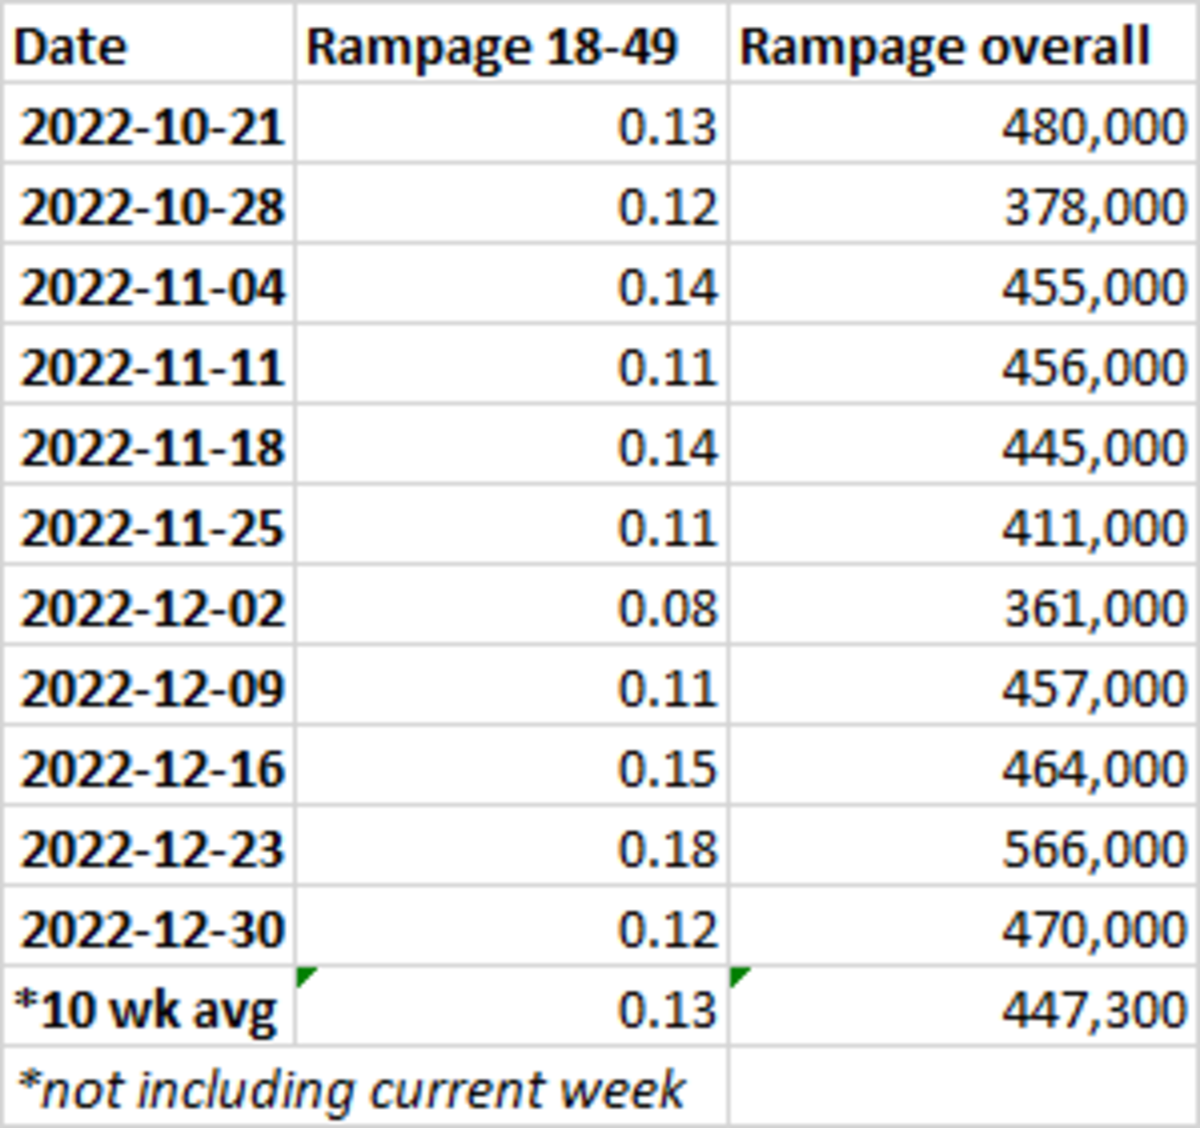 Rampage ratings